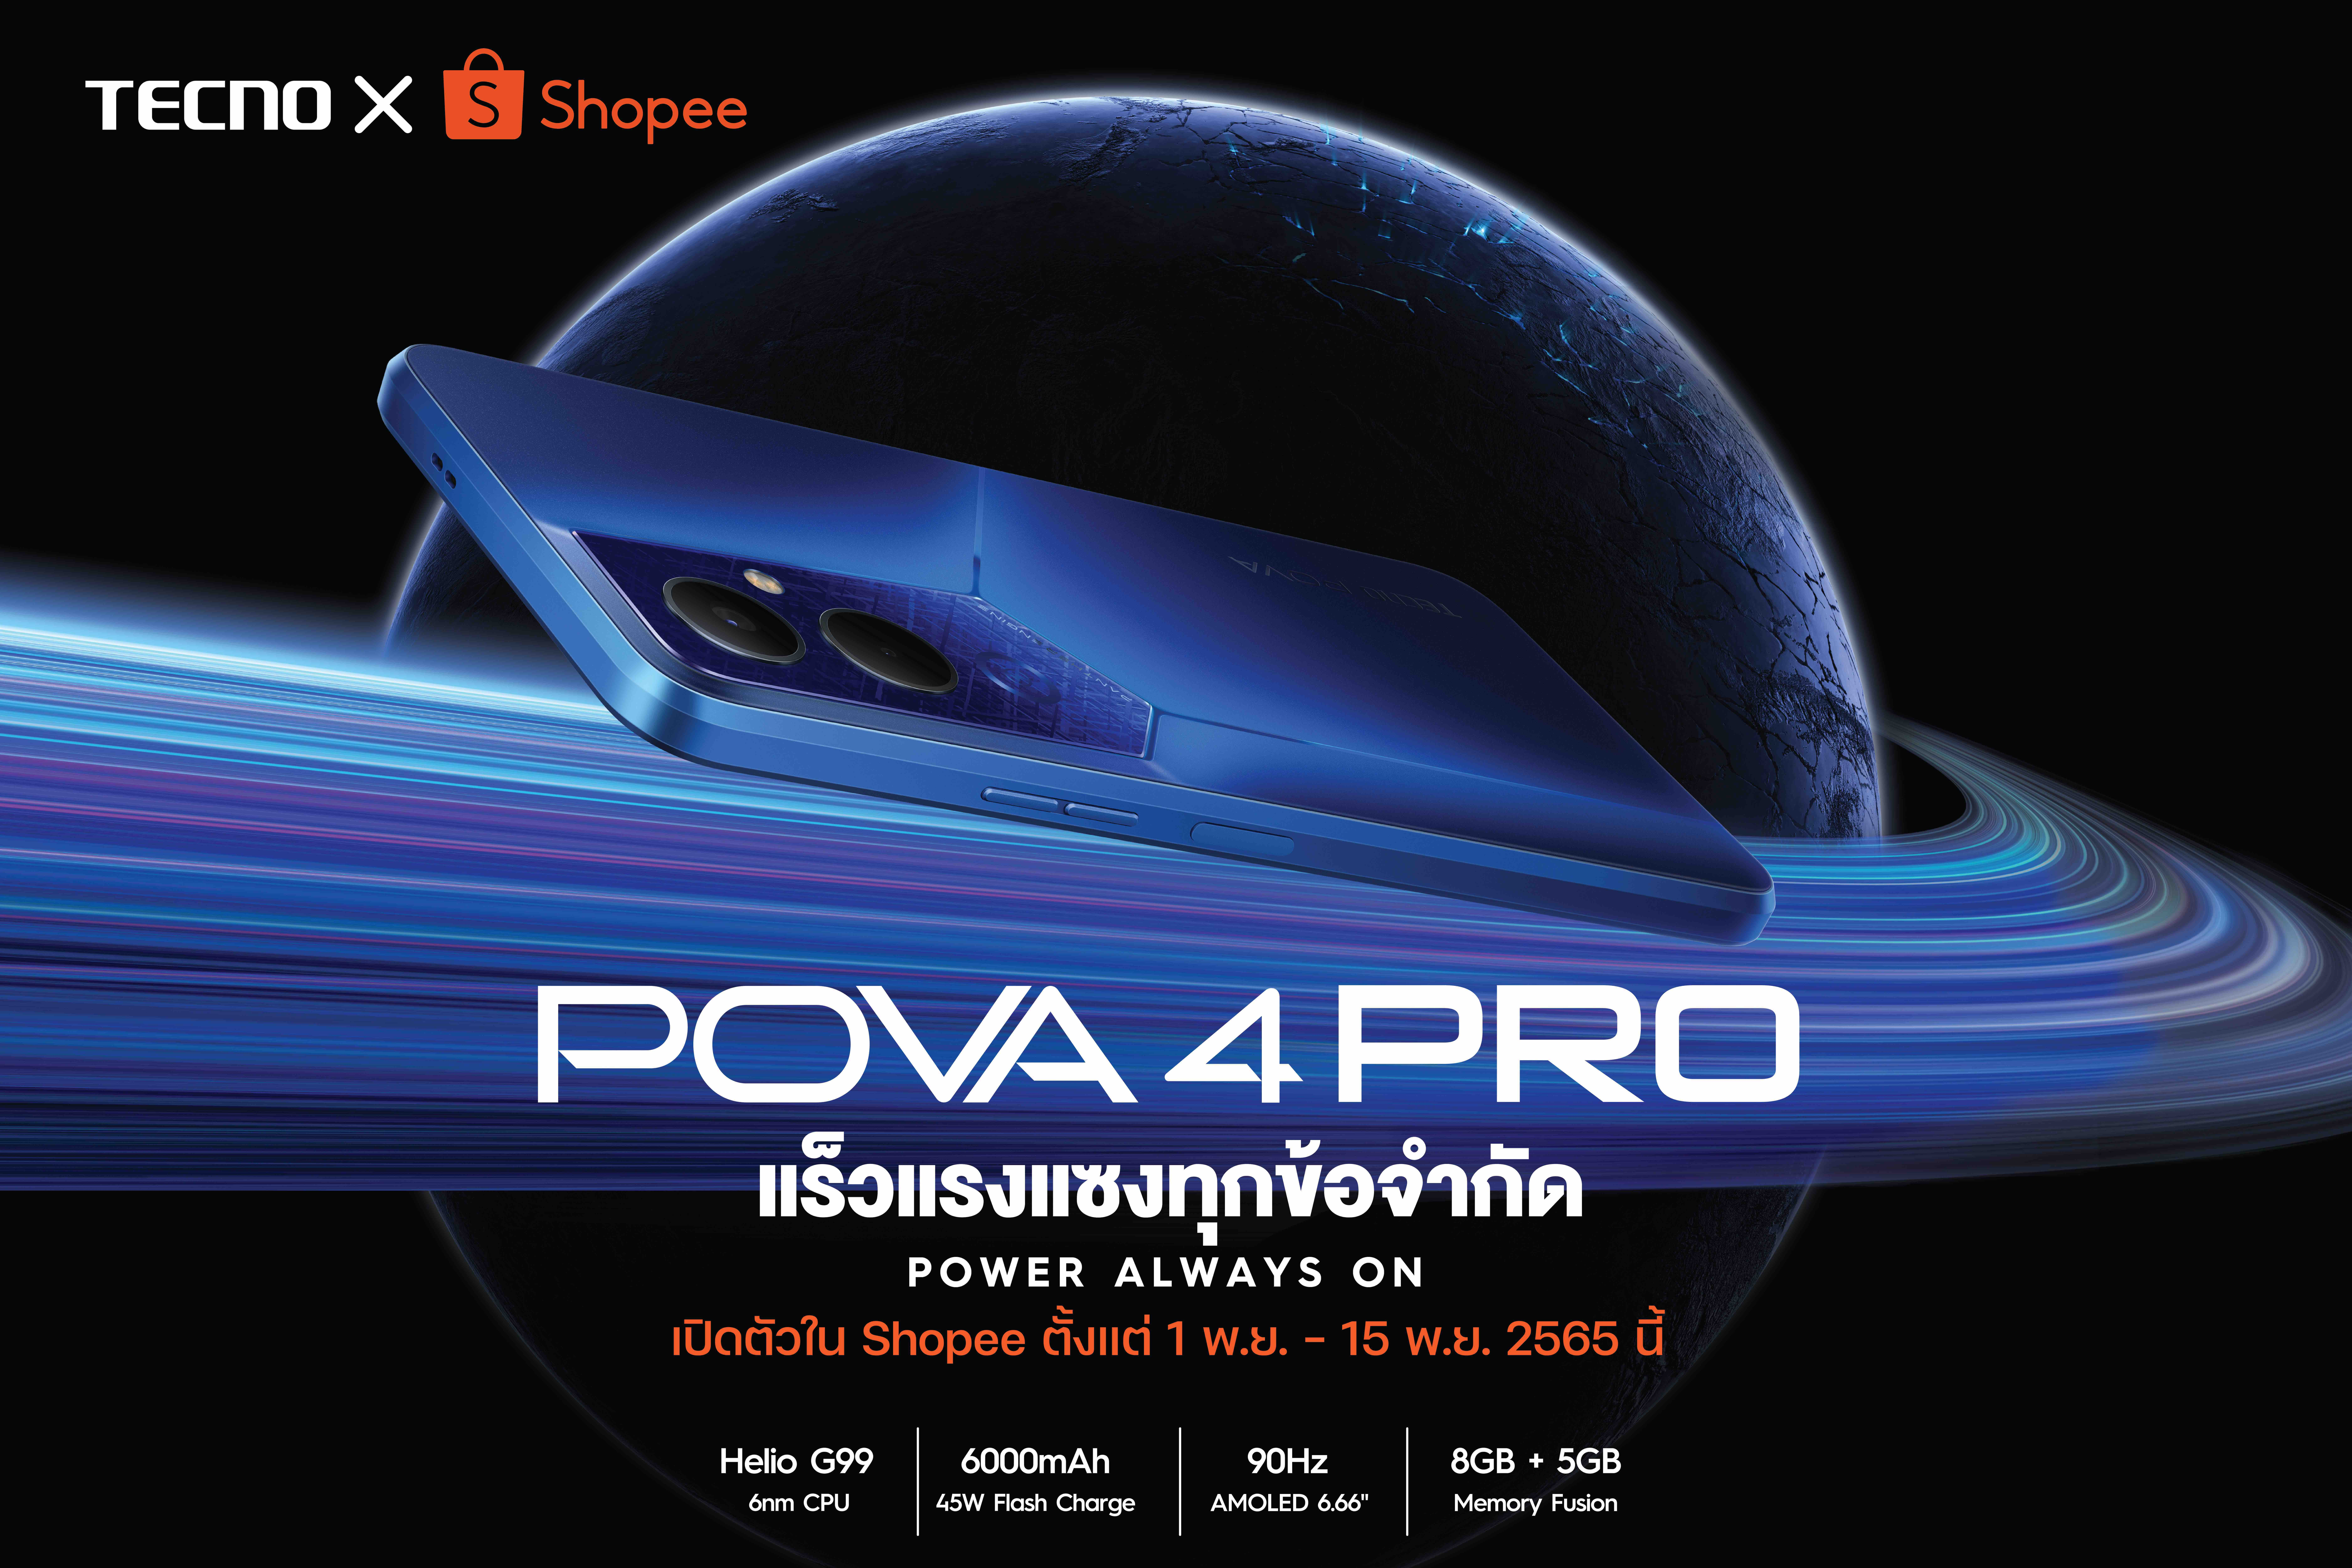 1.POVA 4 Pro ประสิทธิภาพทรงพลัง | POVA 4 Pro | POVA 4 Pro สมาร์ทโฟนล่าสุดจาก TECNO ดีไซน์อัปเกรดทรงพลัง